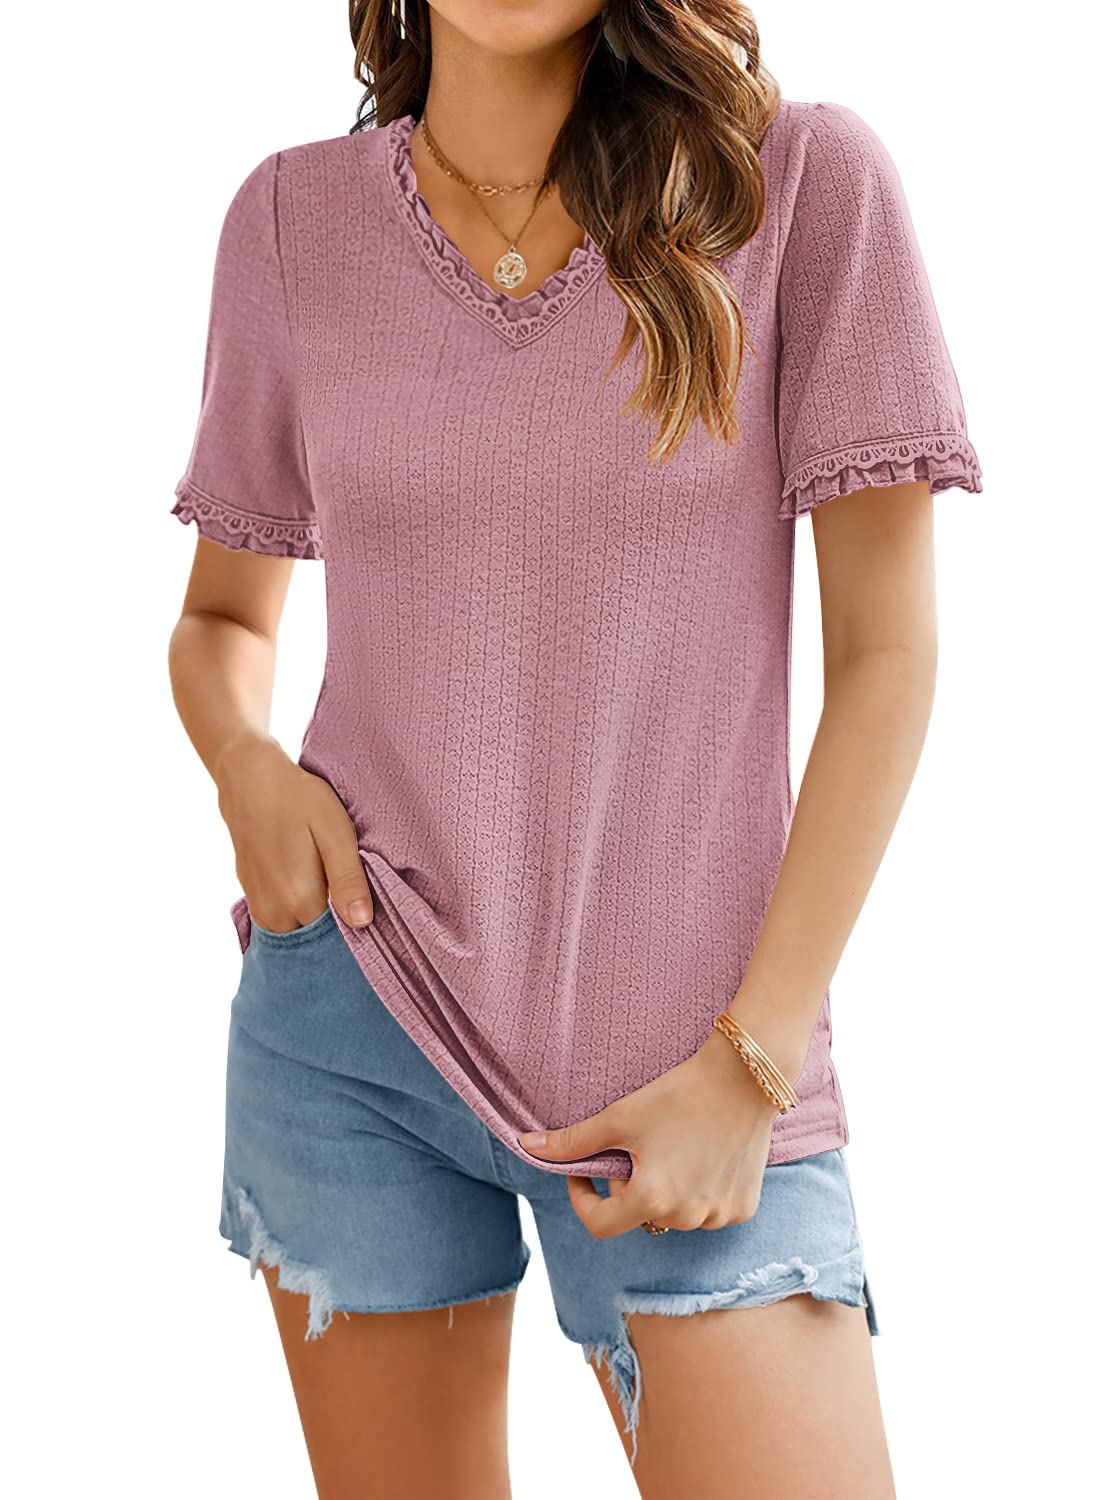 MIHOLL Women's Ruffle V Neck Tops Casual Short Sleeve Tee Cute T-Shirt